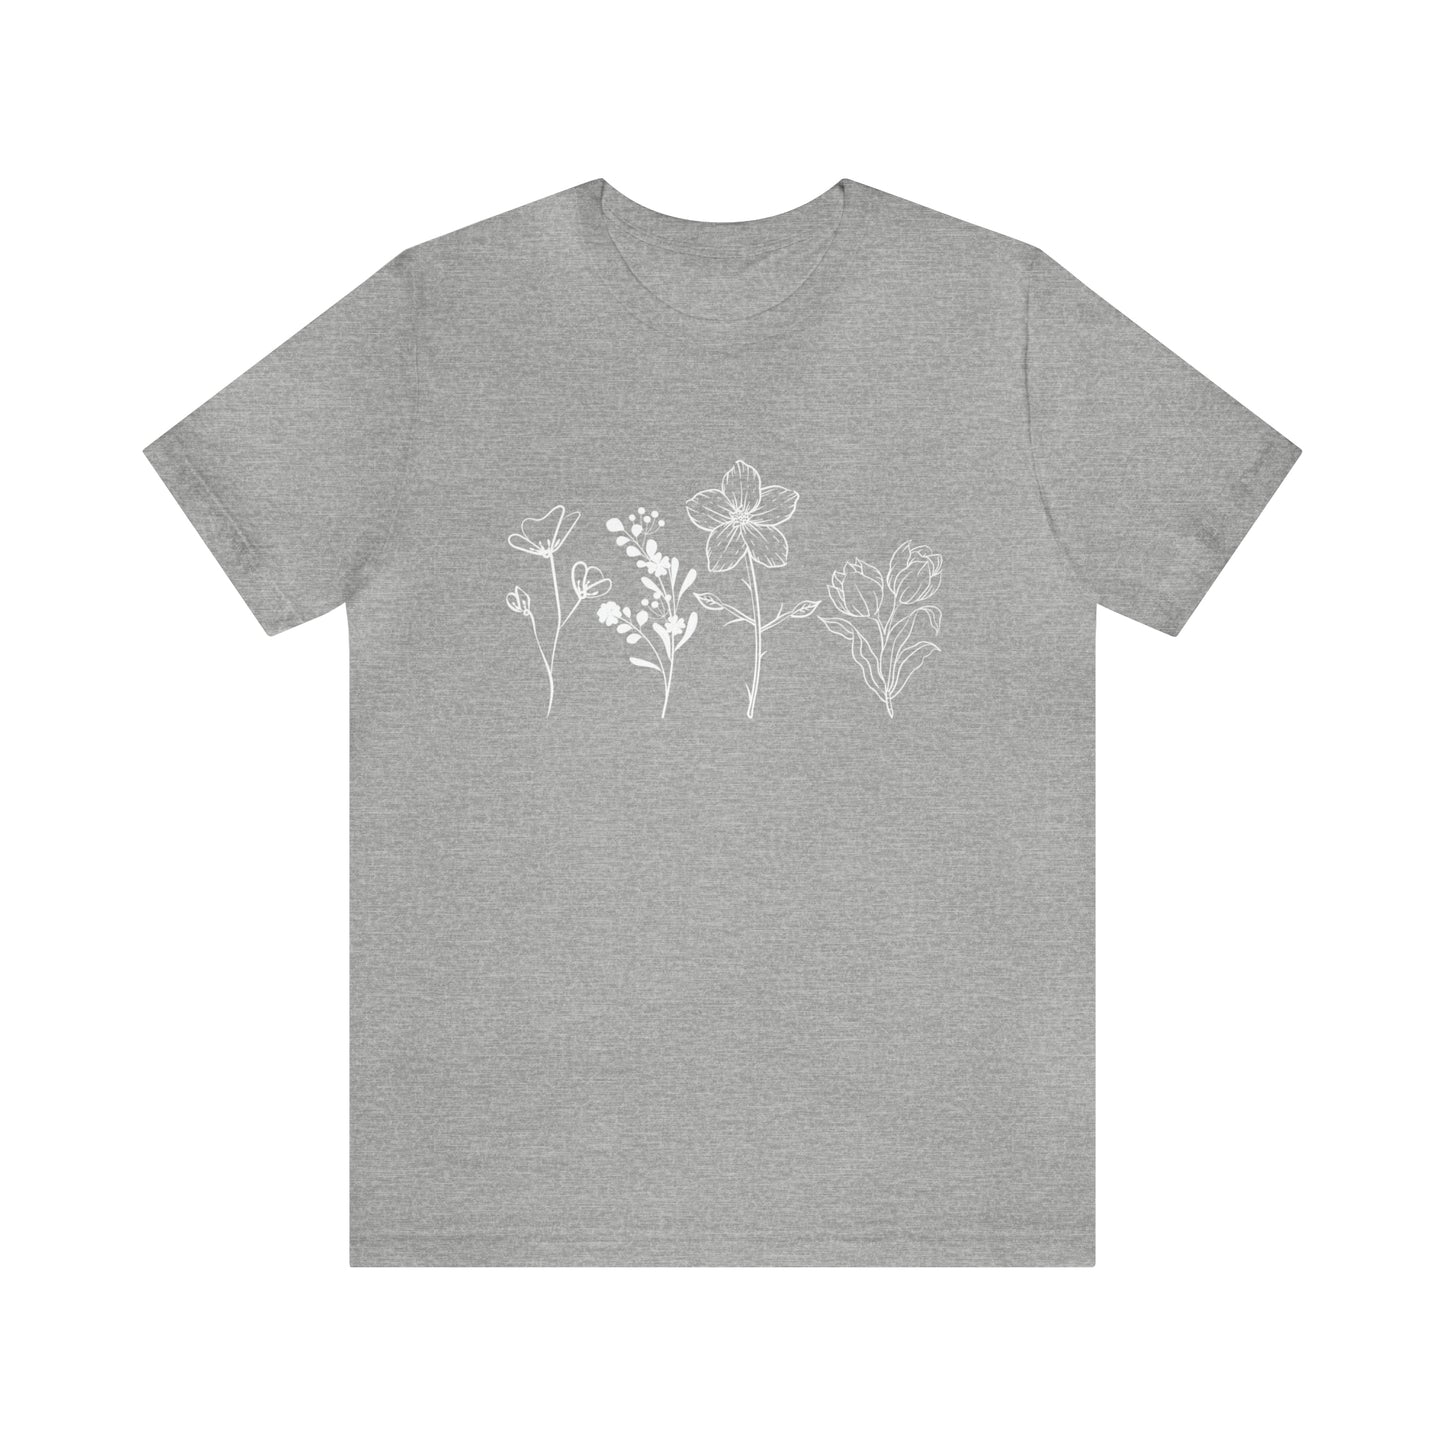 Wildflower Tshirt, Wild Flowers Shirt, Floral Tshirt, Flower Shirt, Gift for Women, Ladies Shirts, Best Friend Gift, Plant Mom shirt Garden